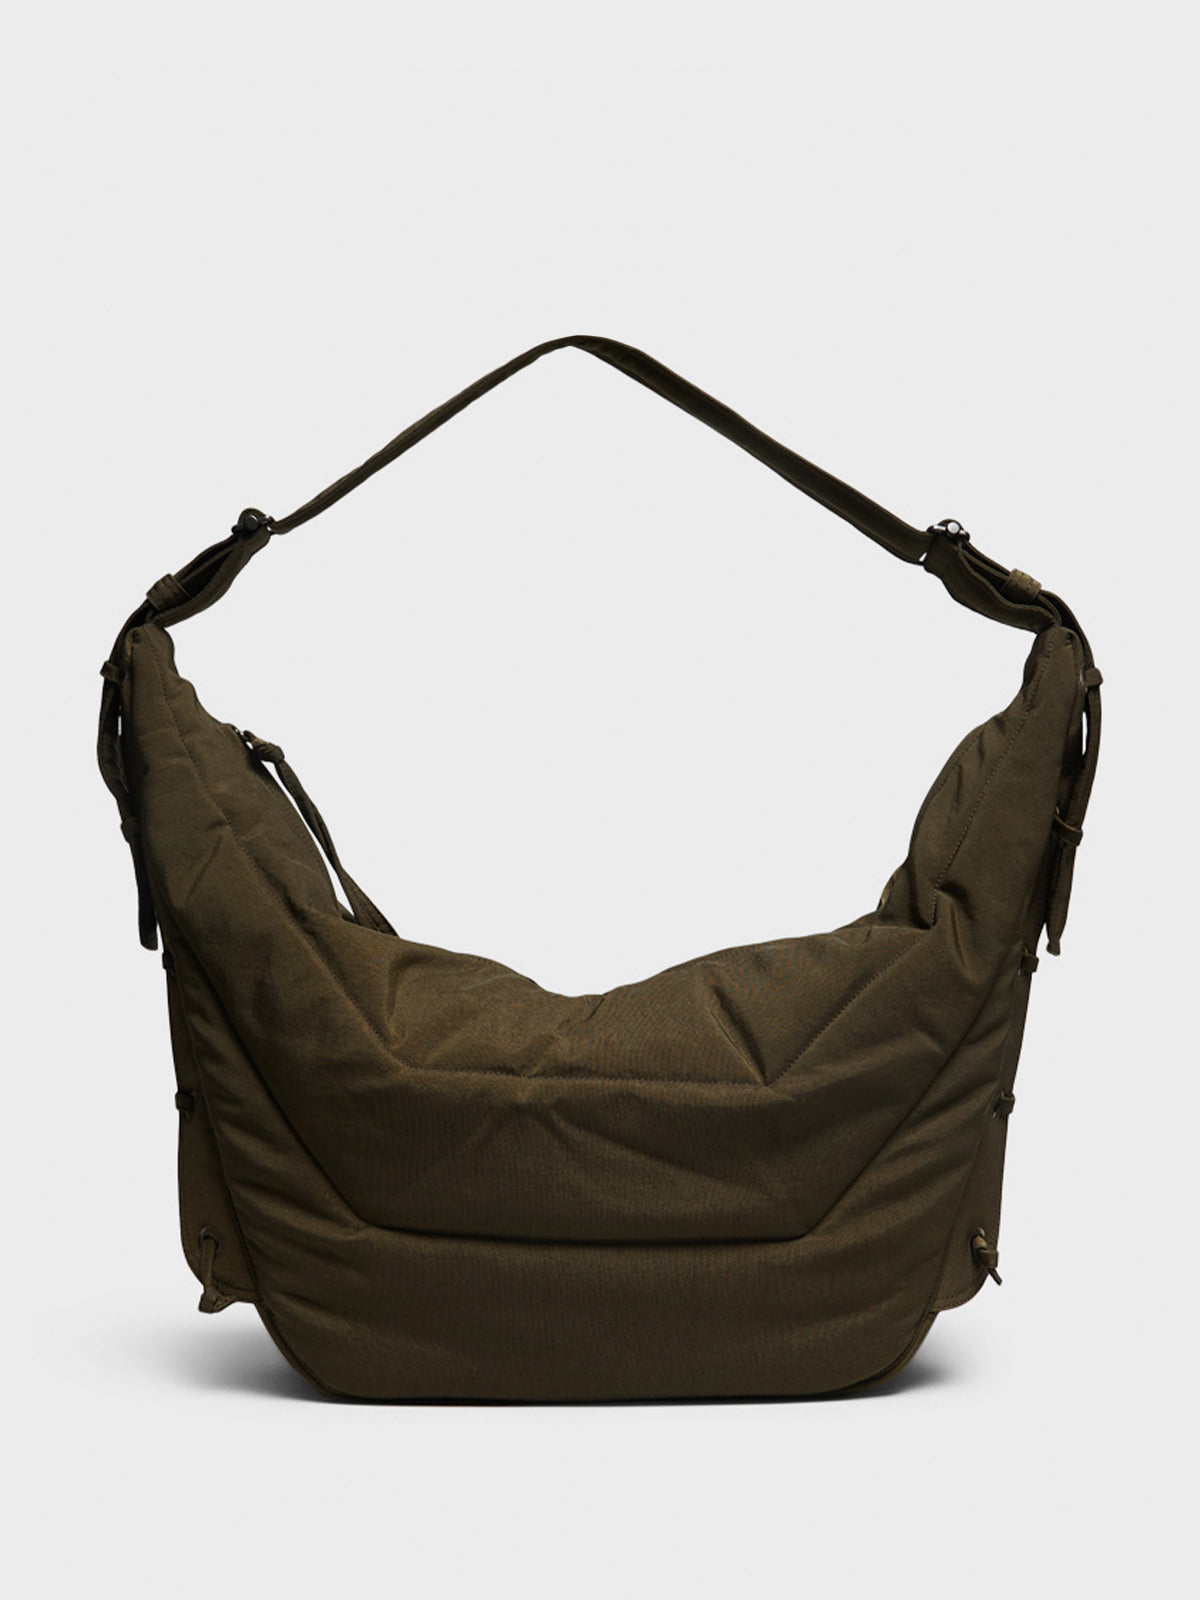 Large Soft Game Bag in Dark Brown